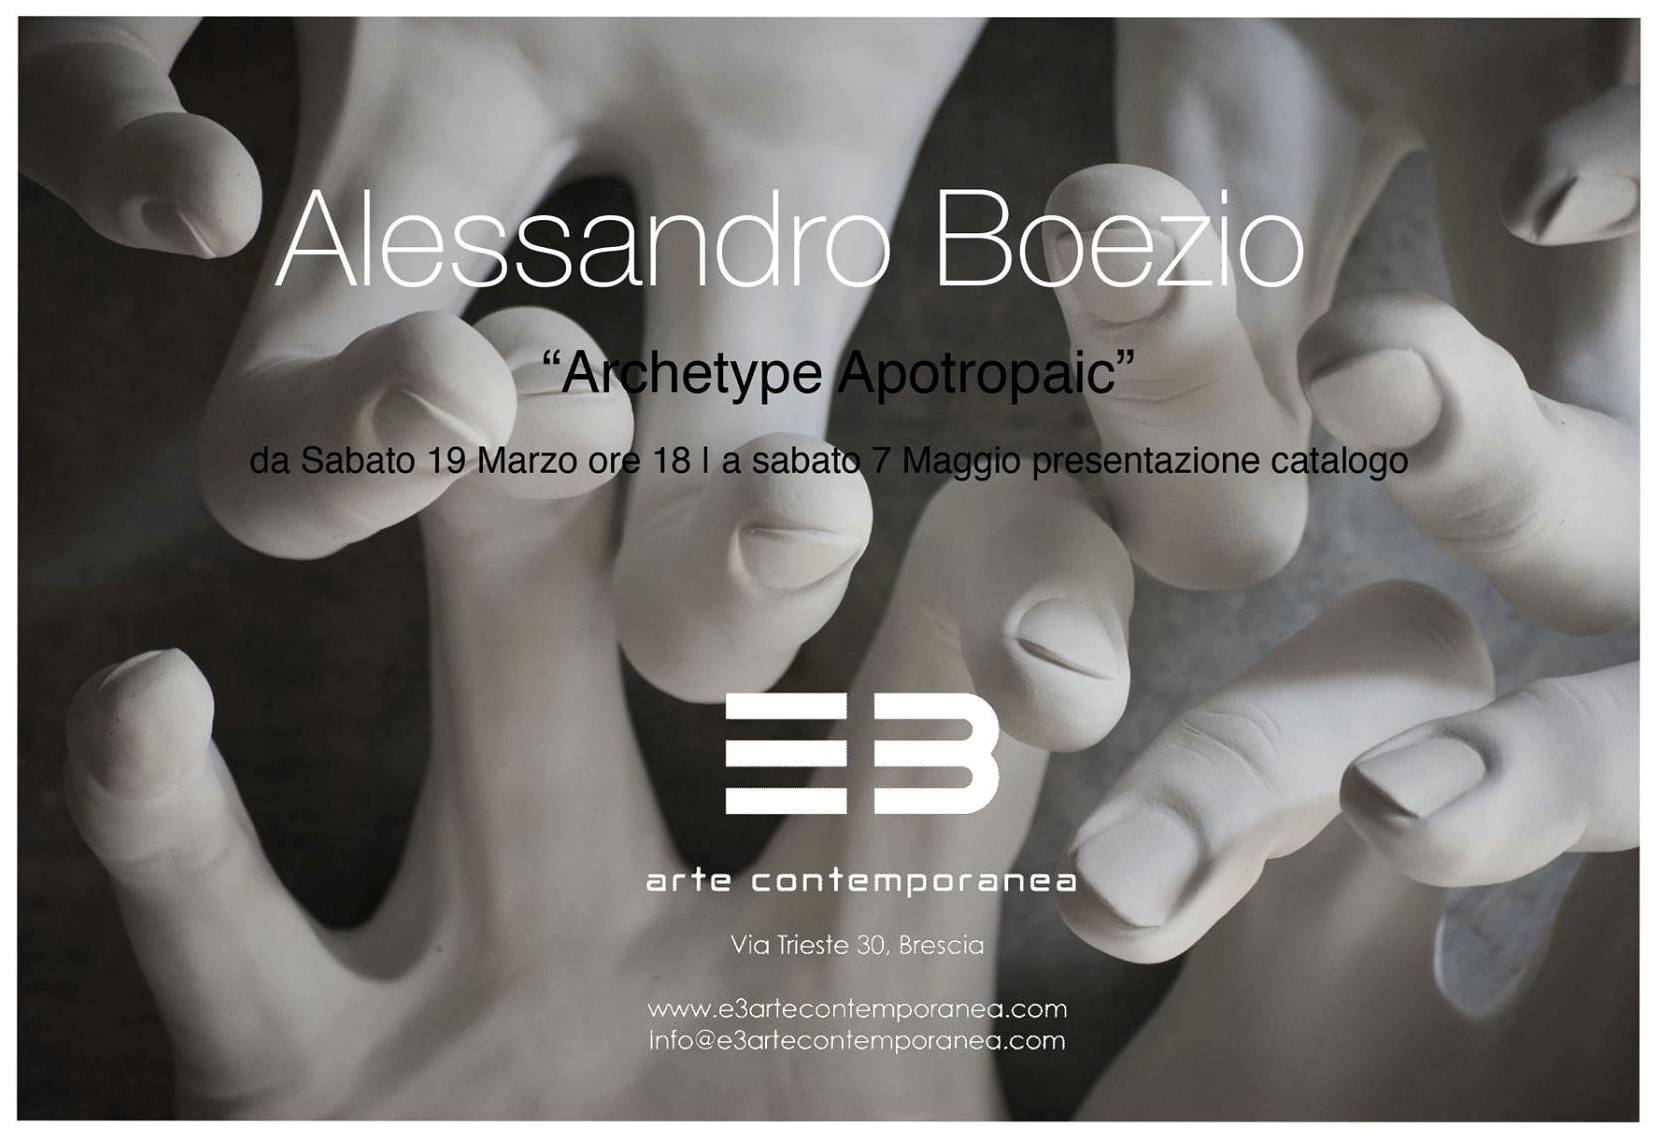 Alessandro Boezio – Archetype Apotropaic